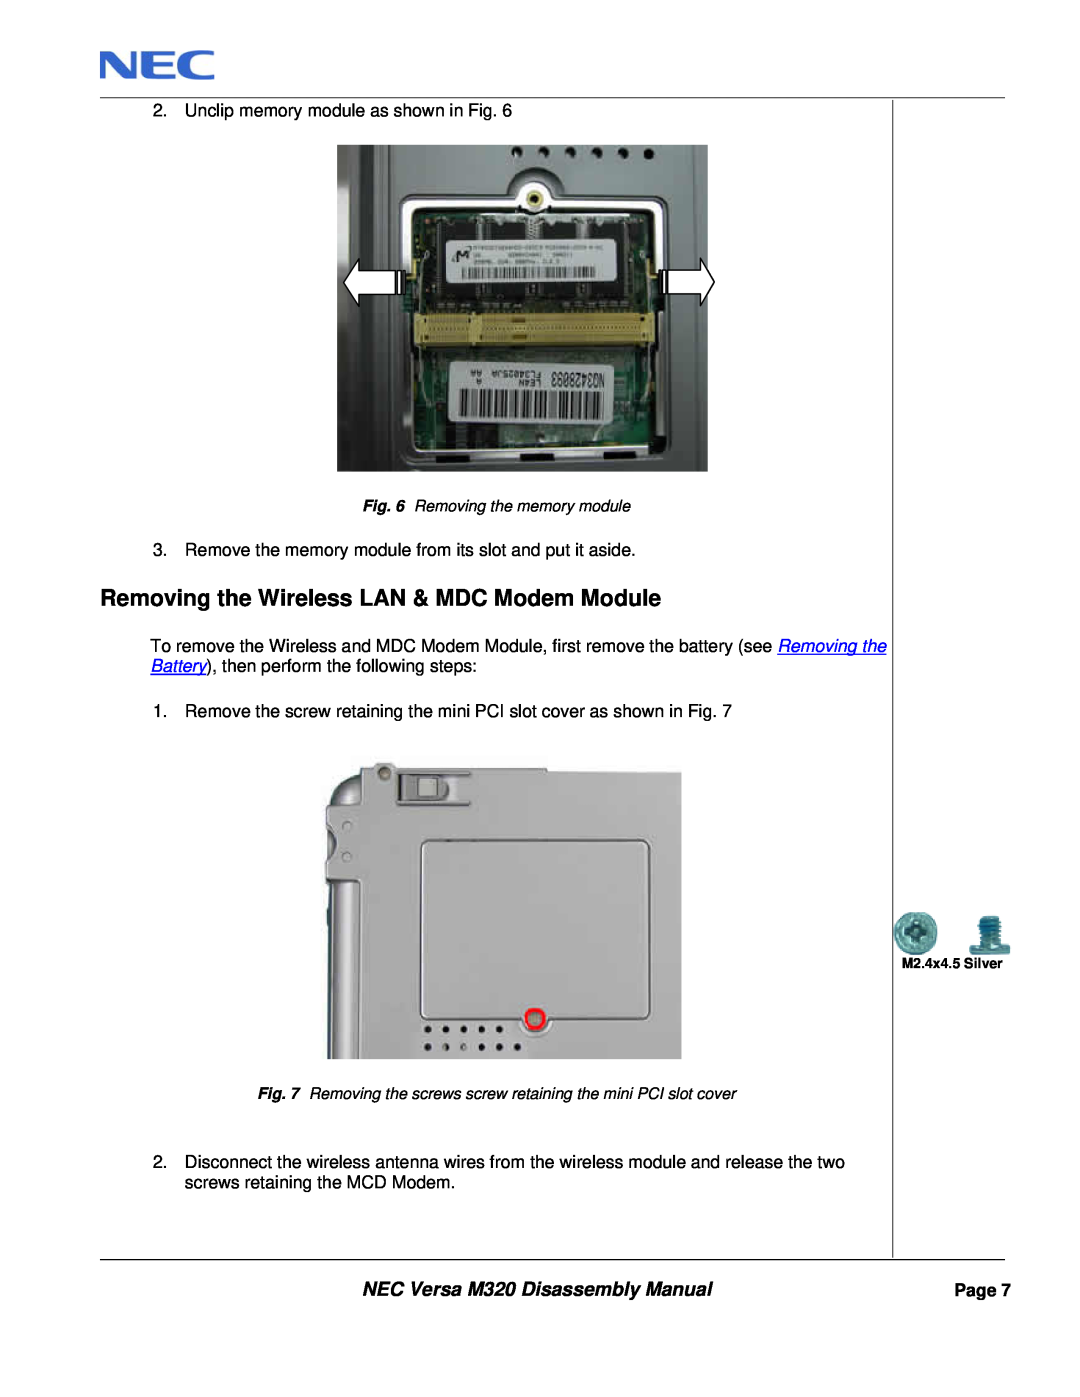 NEC manual Removing the Wireless LAN & MDC Modem Module, NEC Versa M320 Disassembly Manual 